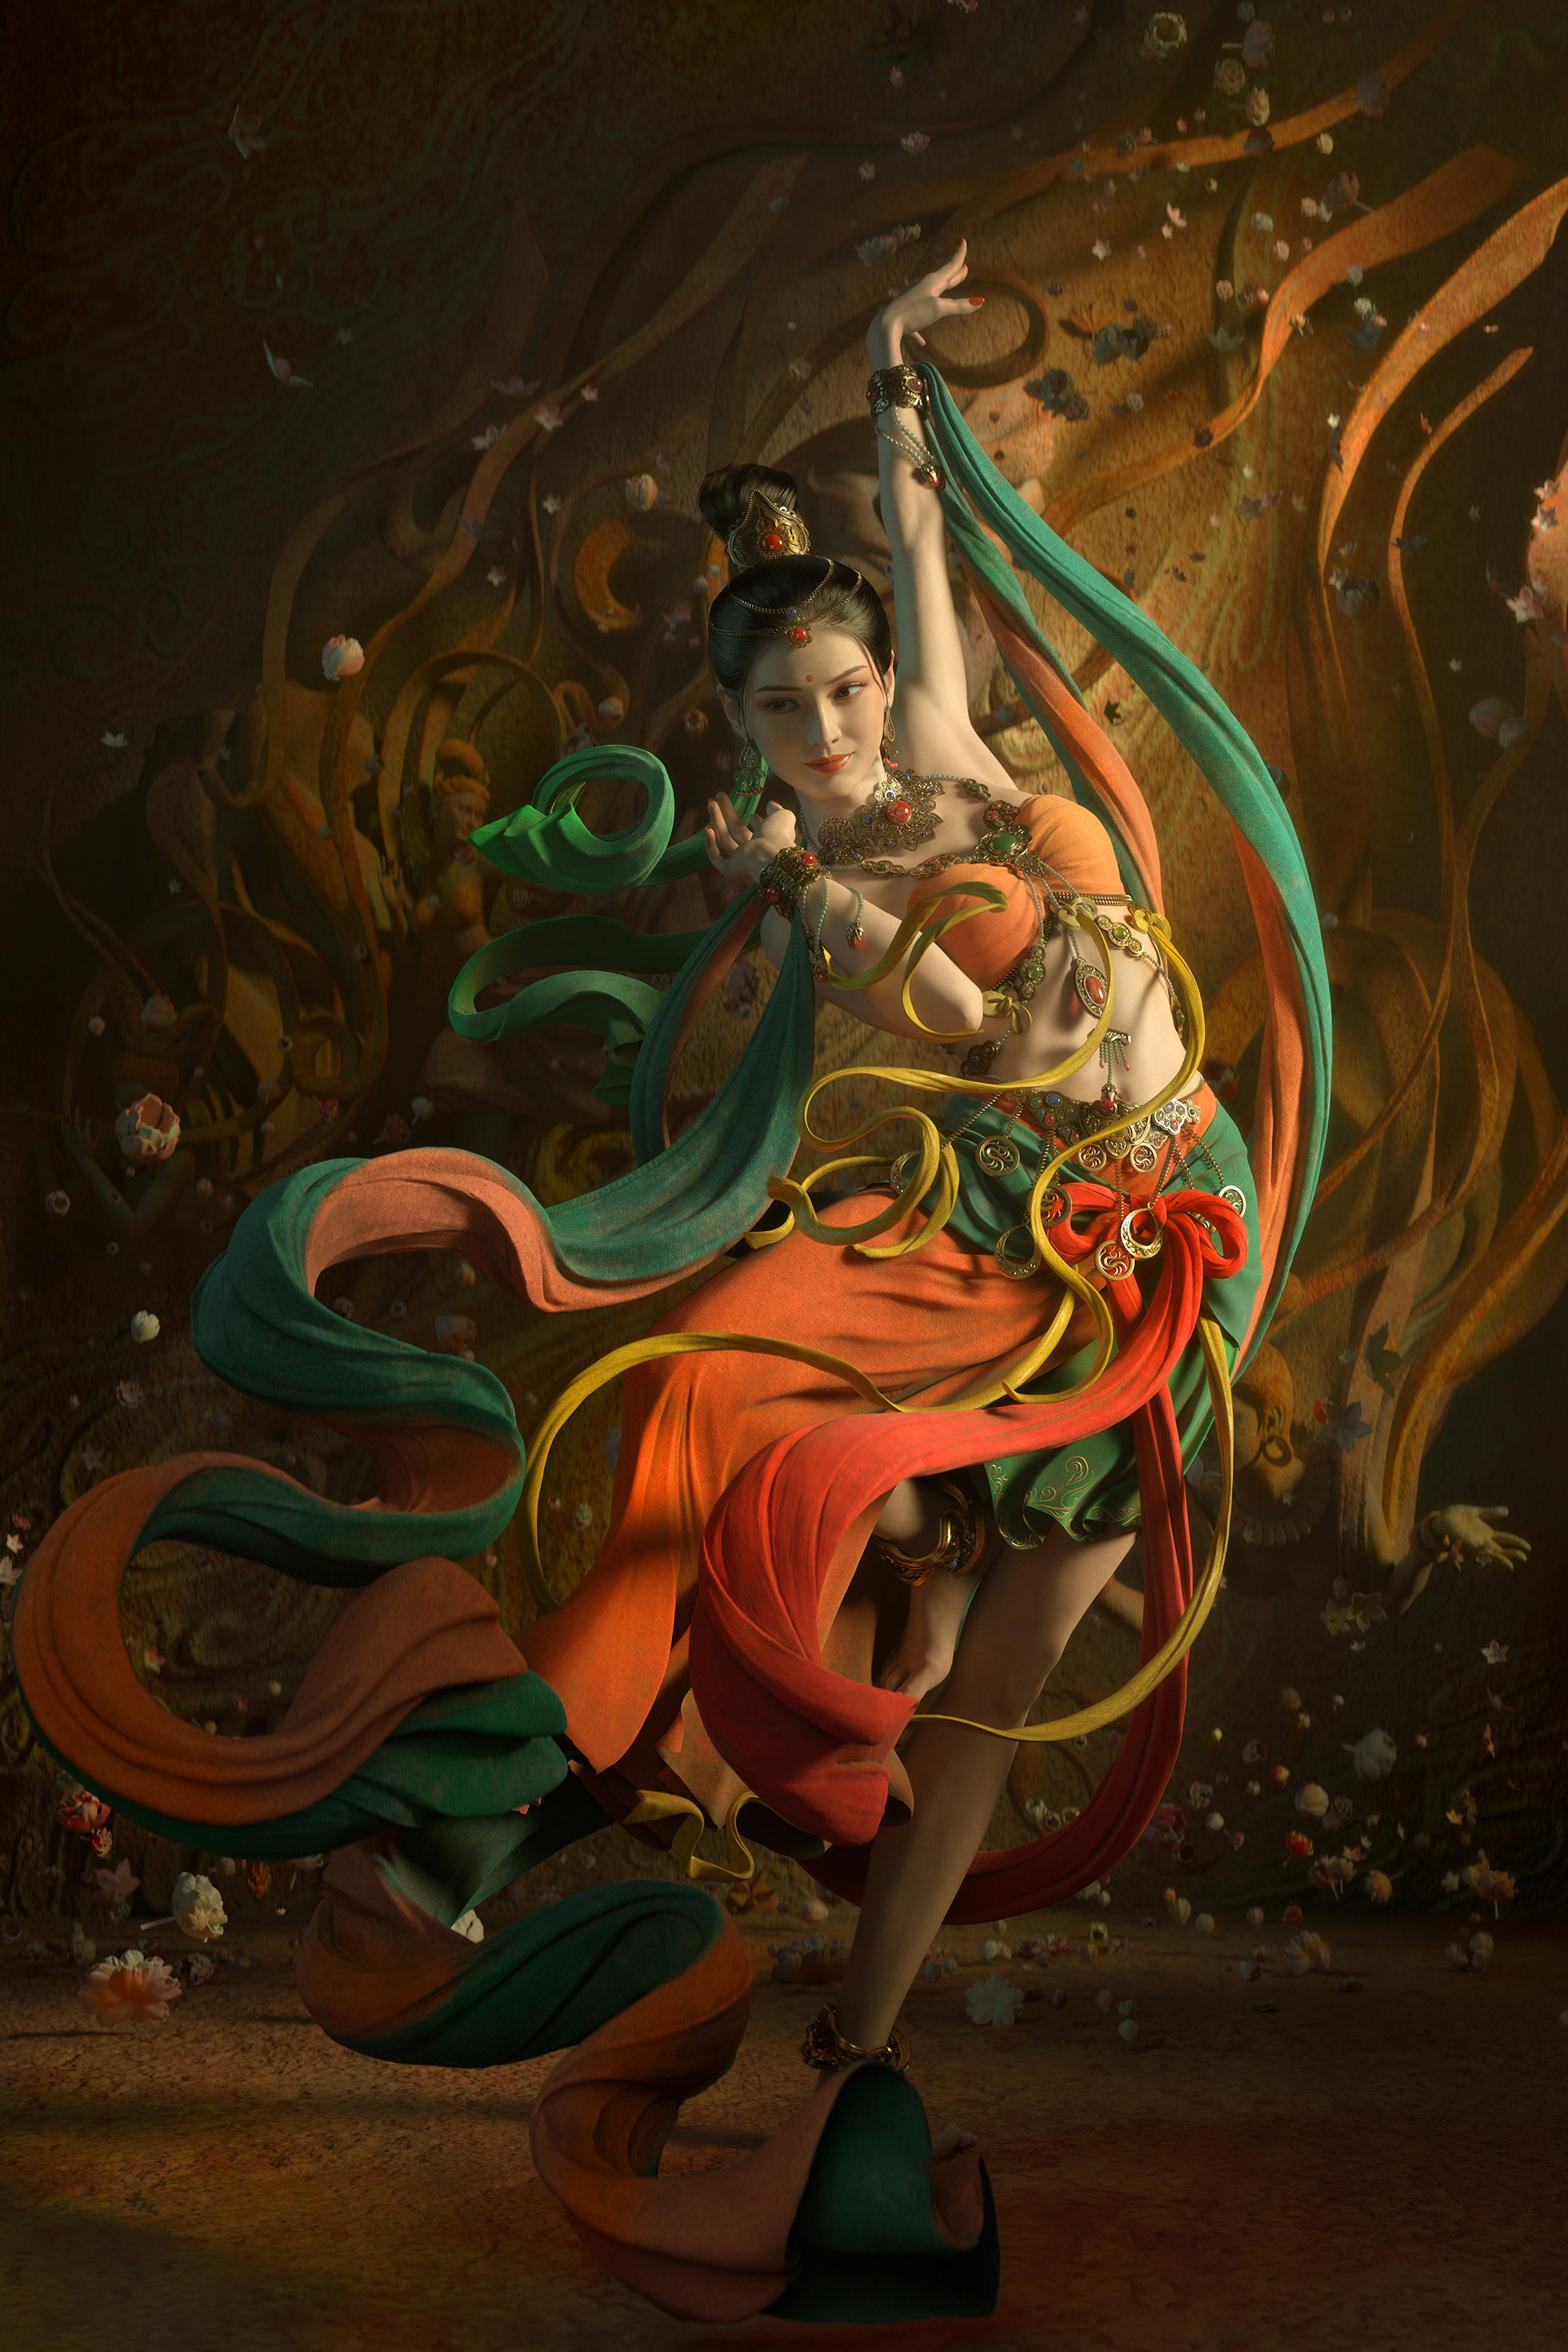 Qi Sheng Luo Artwork Digital Art Women Fantasy Art Fantasy Girl Artstation Wallpaper